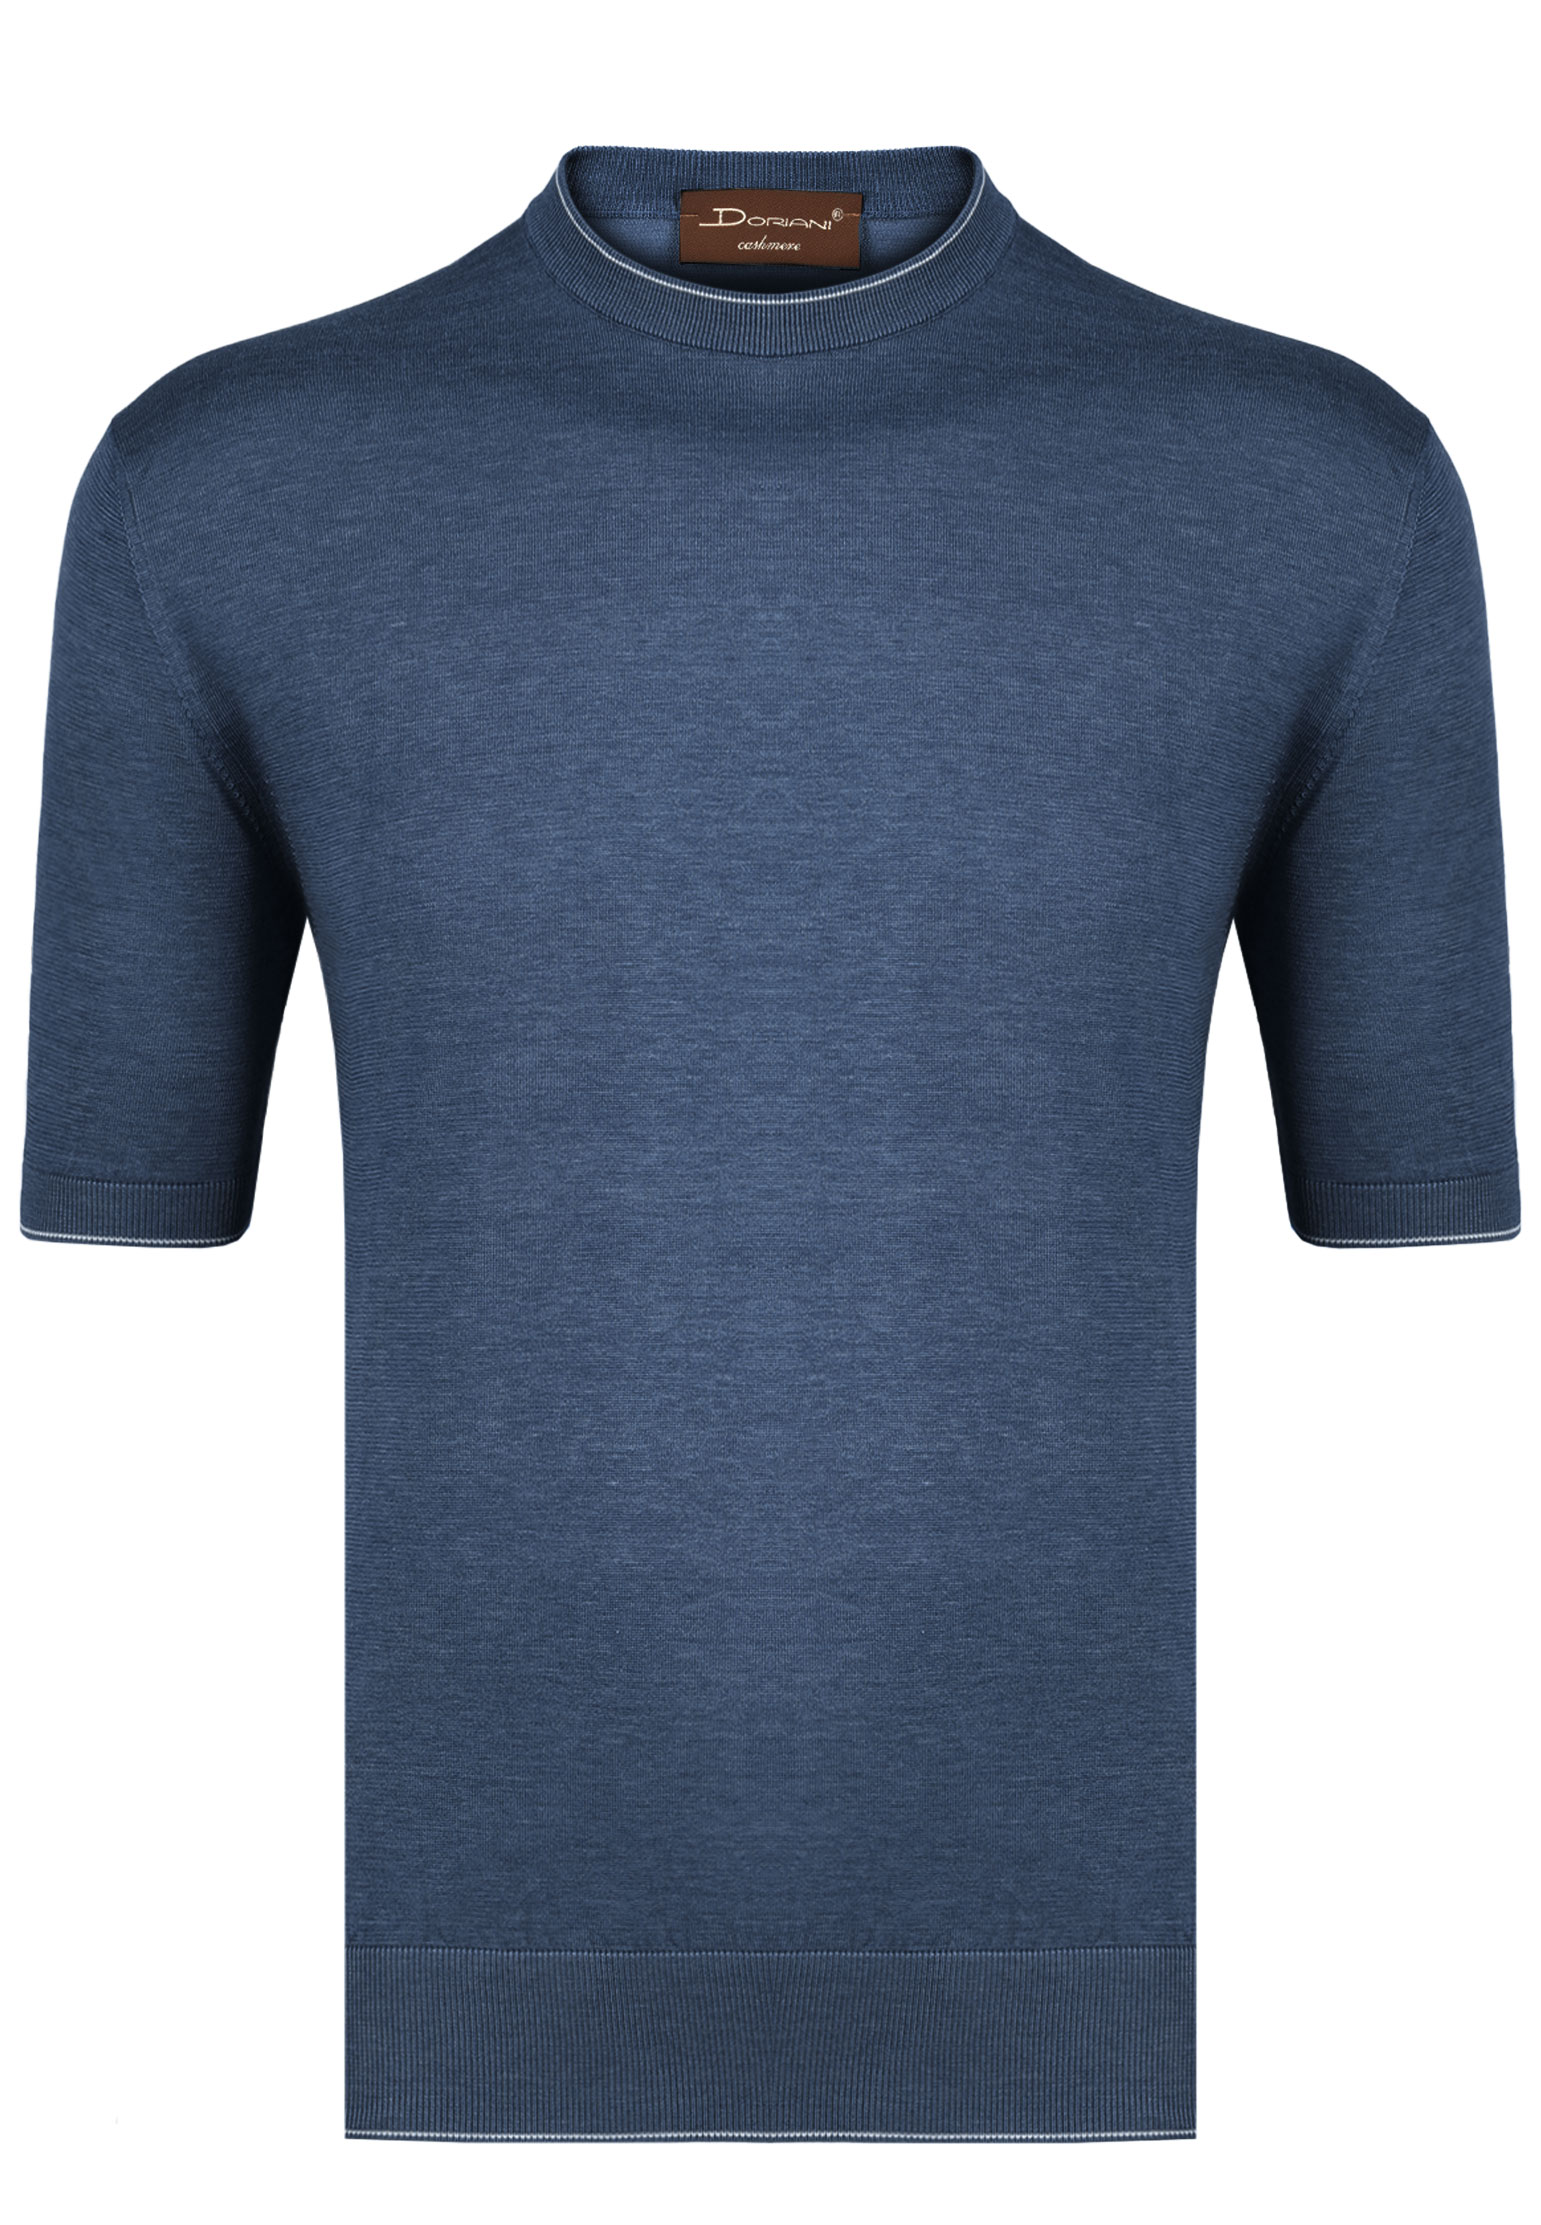 Пуловер DORIANI Синий, размер 48